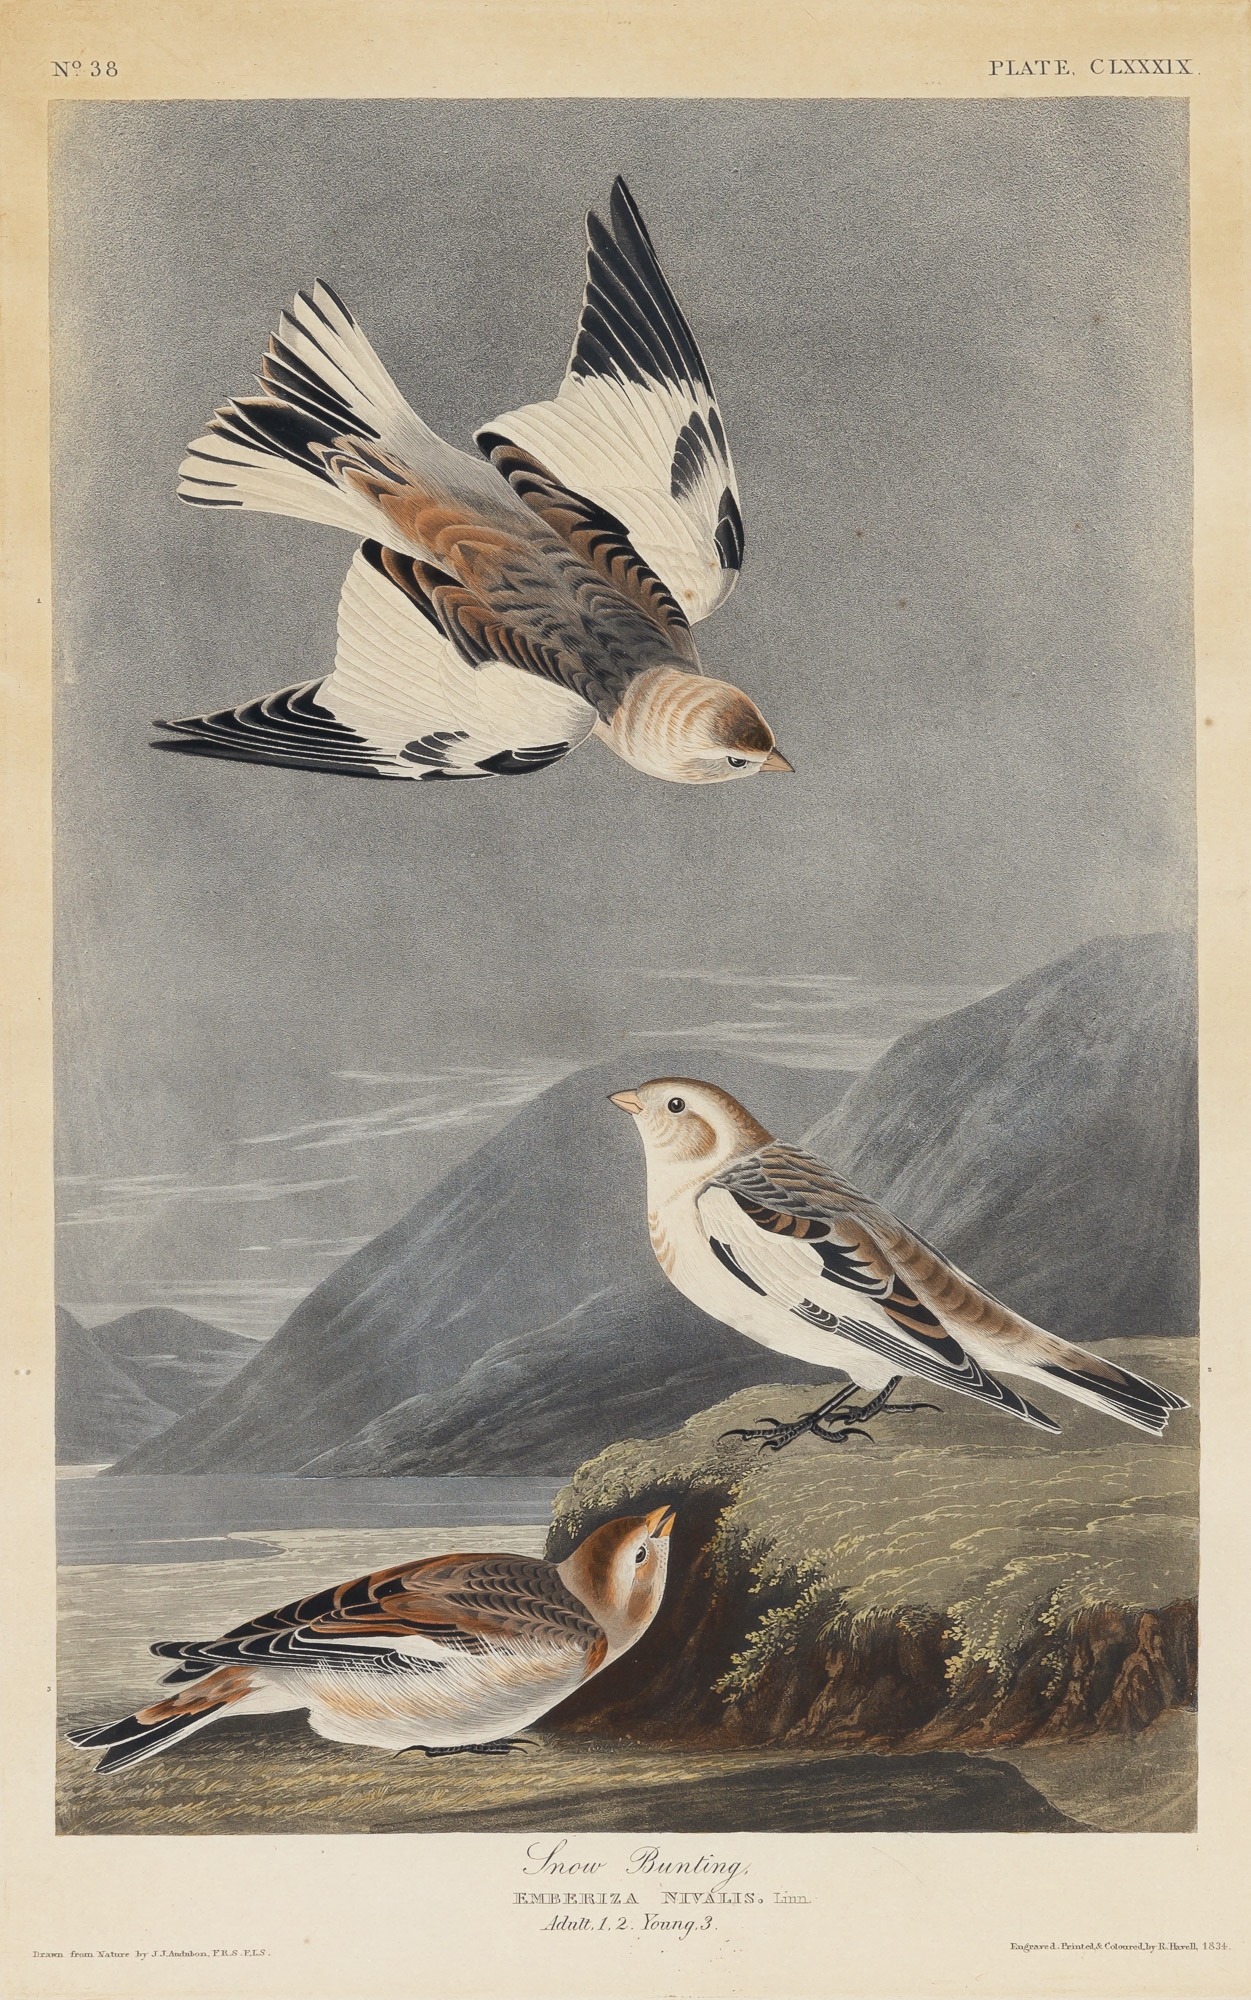 The Birds of America by John James Audubon, 1834